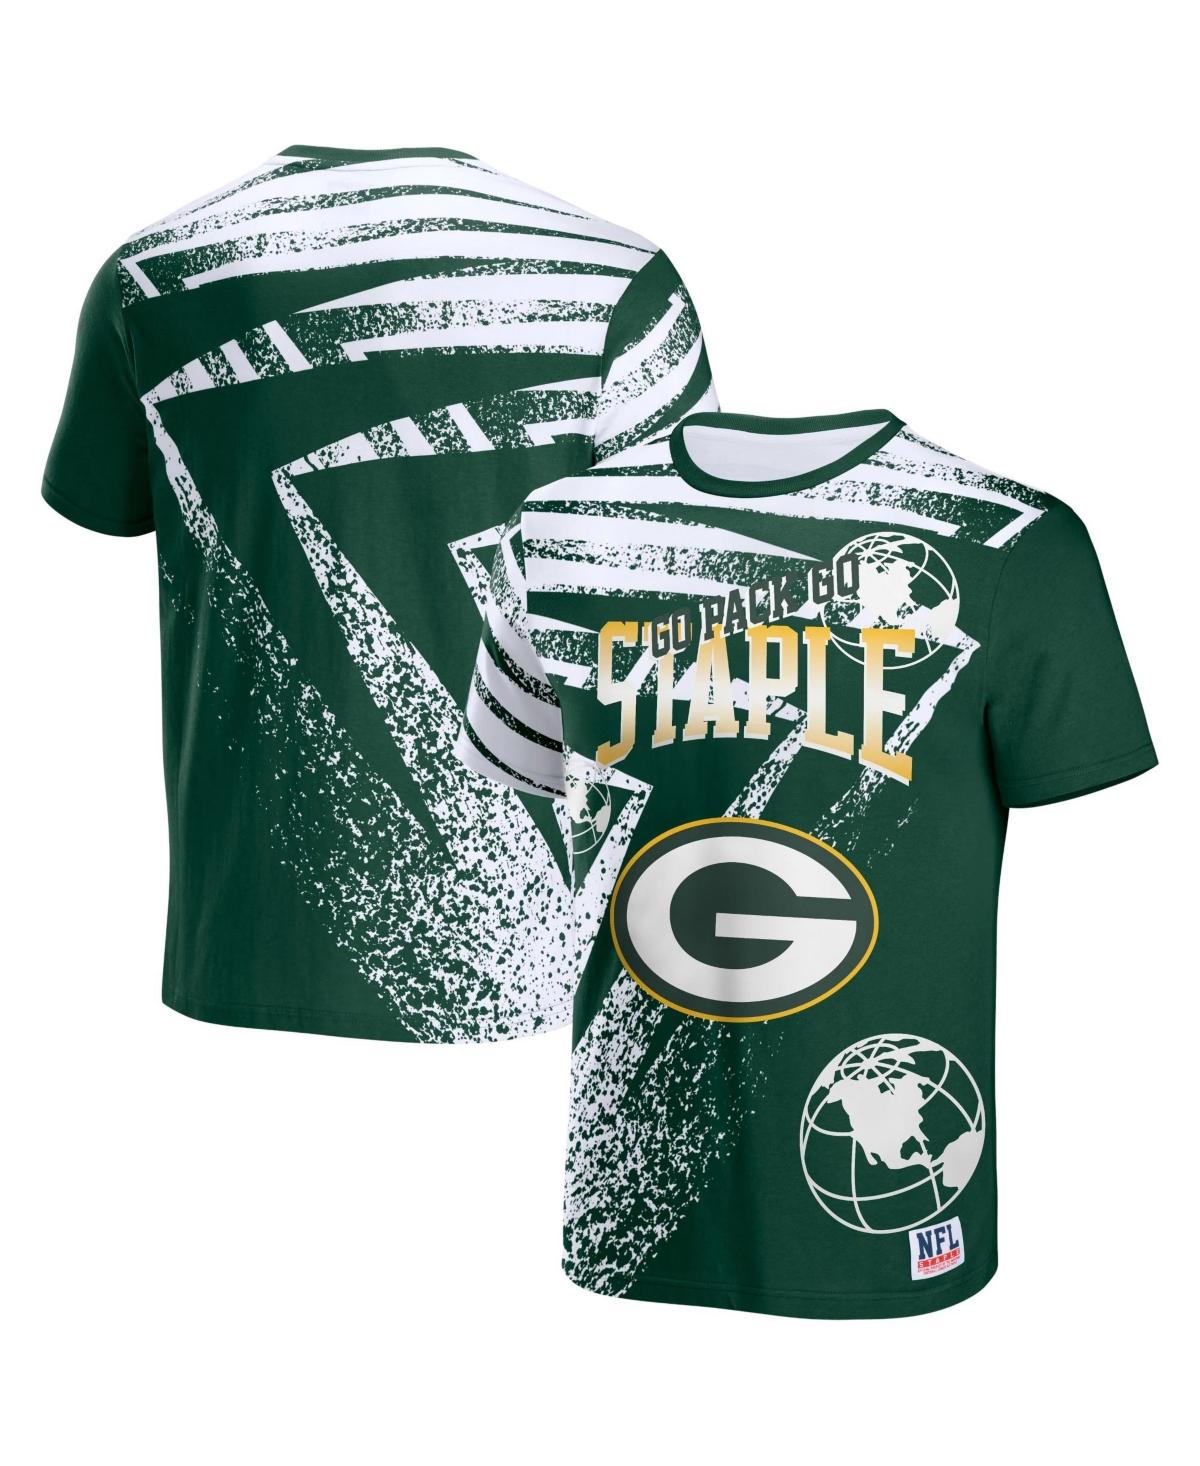 Shop Nfl Properties Men's Nfl X Staple Hunter Green Green Bay Packers Team Slogan All Over Print Short Sleeve T-shirt